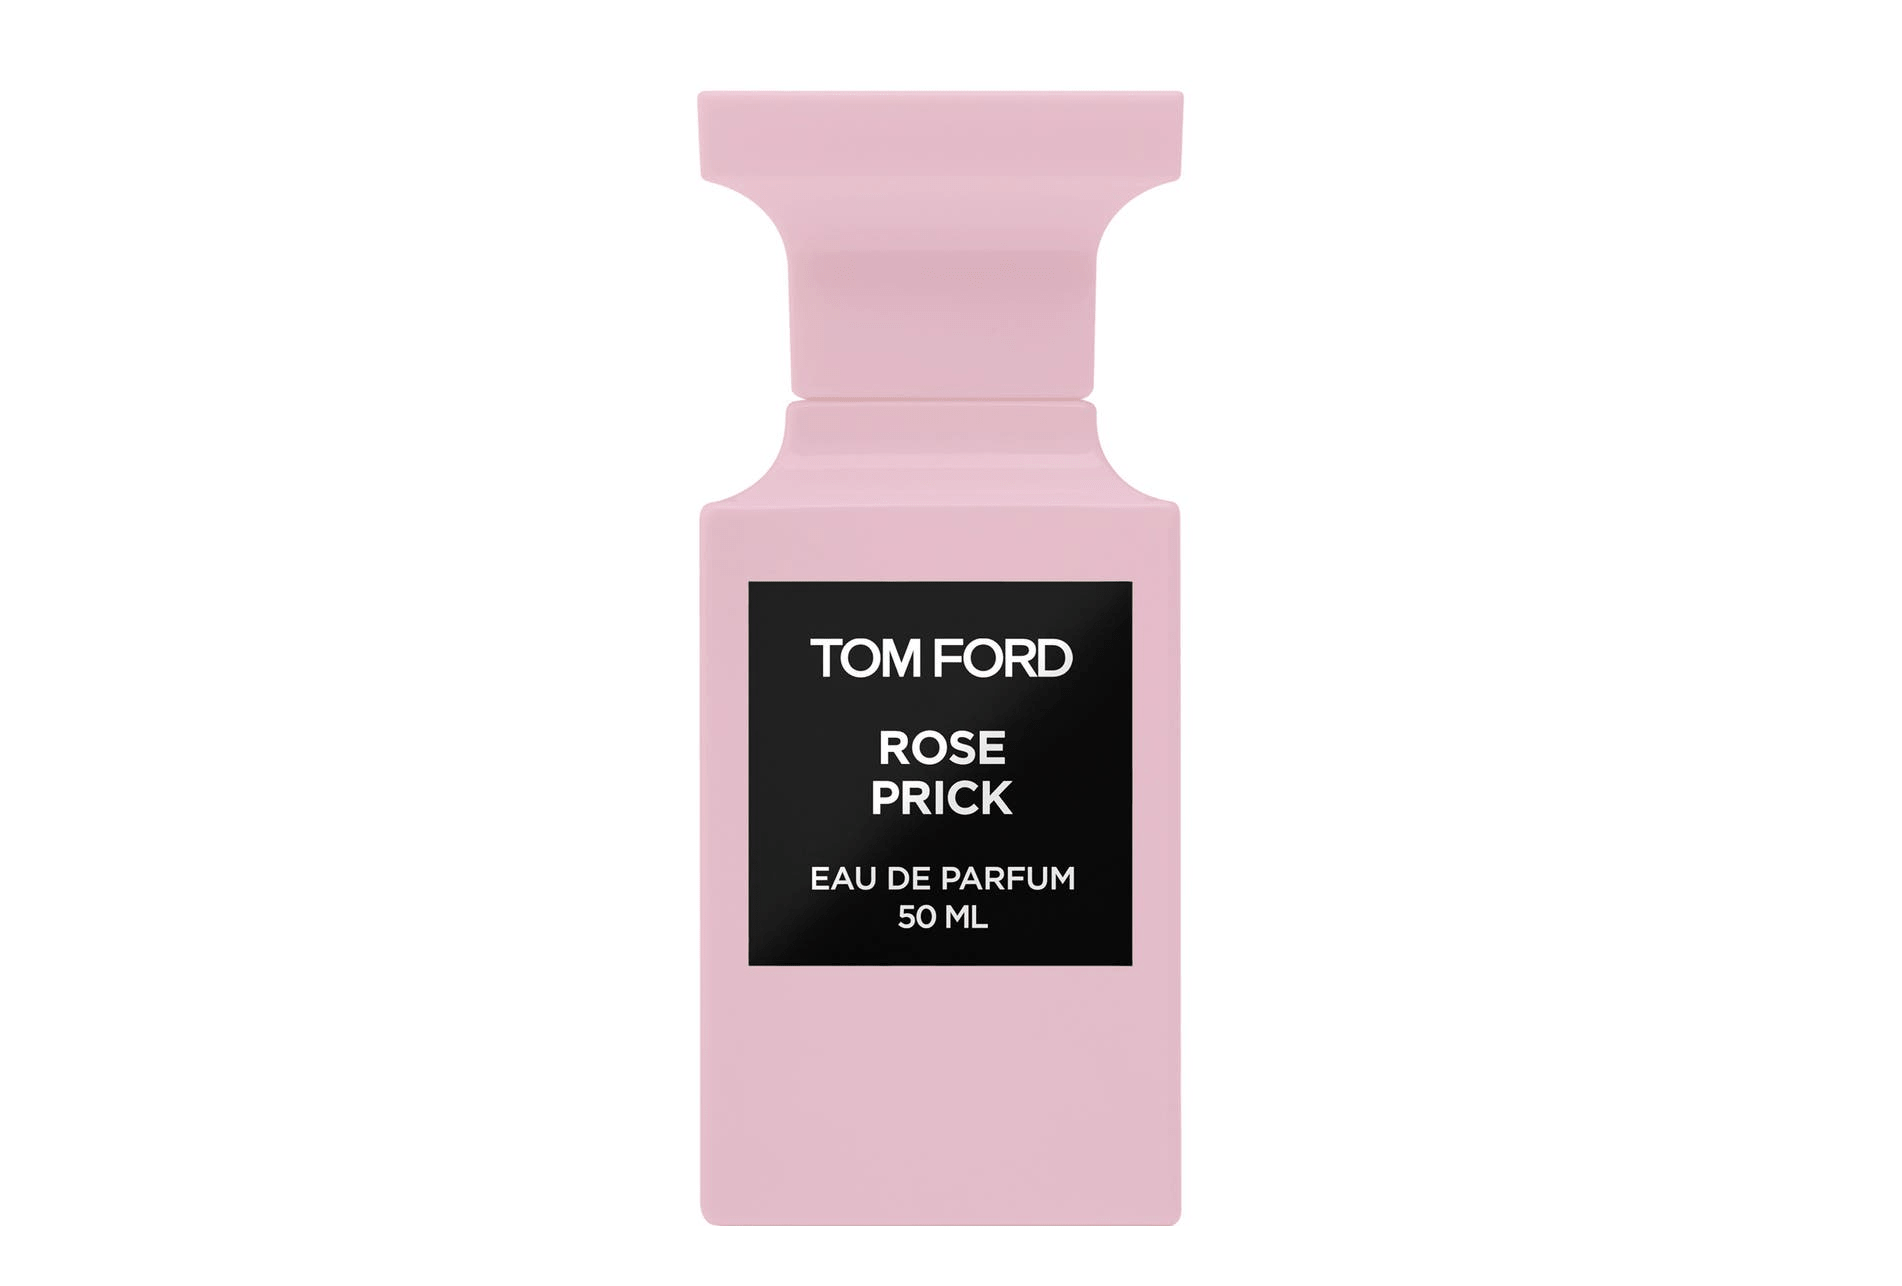 Tom Ford - Rose Prick, (トムフォード - ローズ プリック)